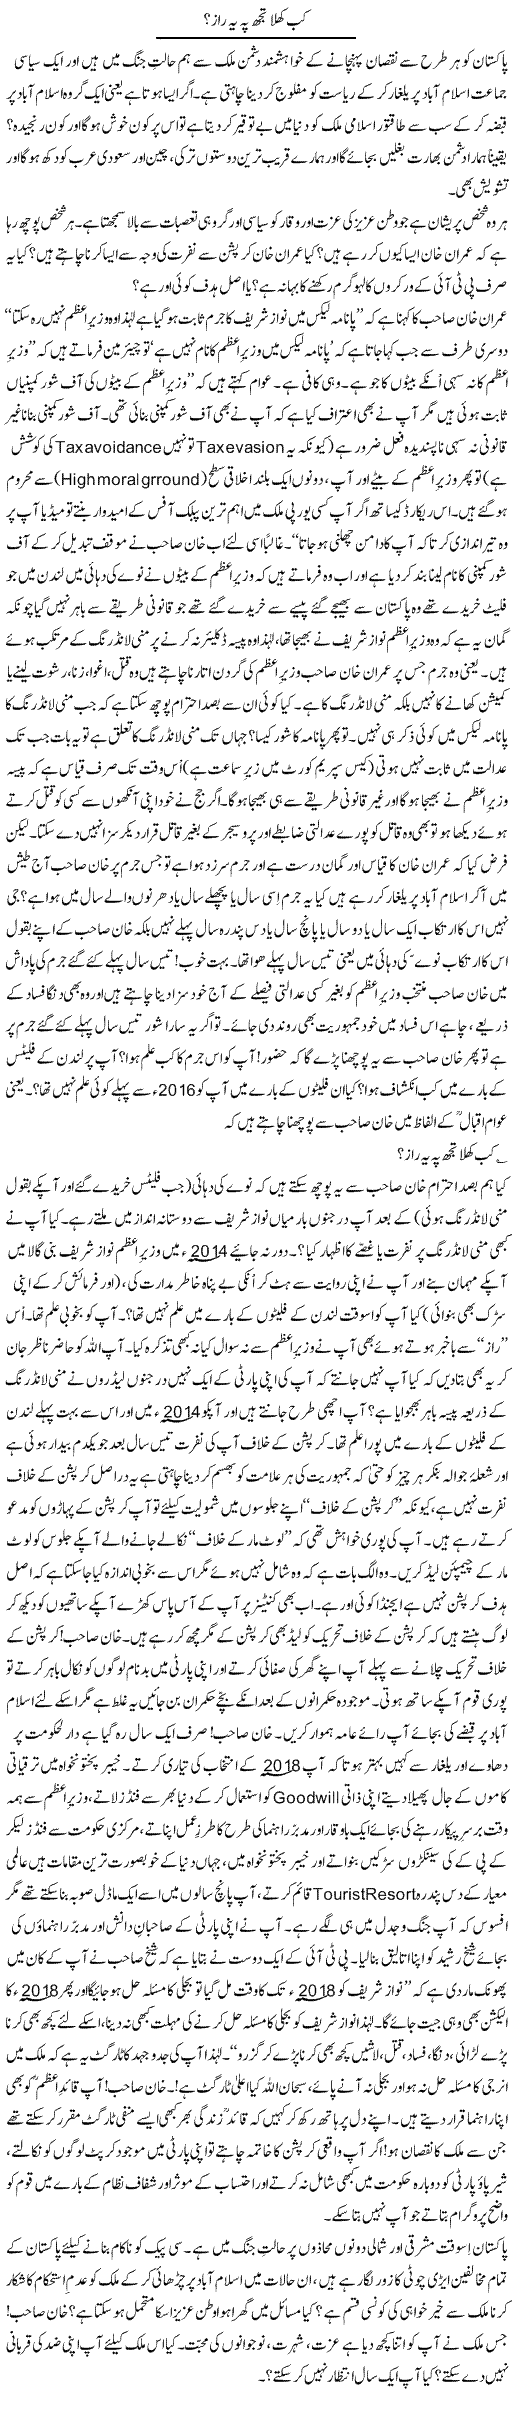 Kab Khula Tujh Pe Ye Raaz? | Zulfiqar Ahmed Cheema | Daily Urdu Columns